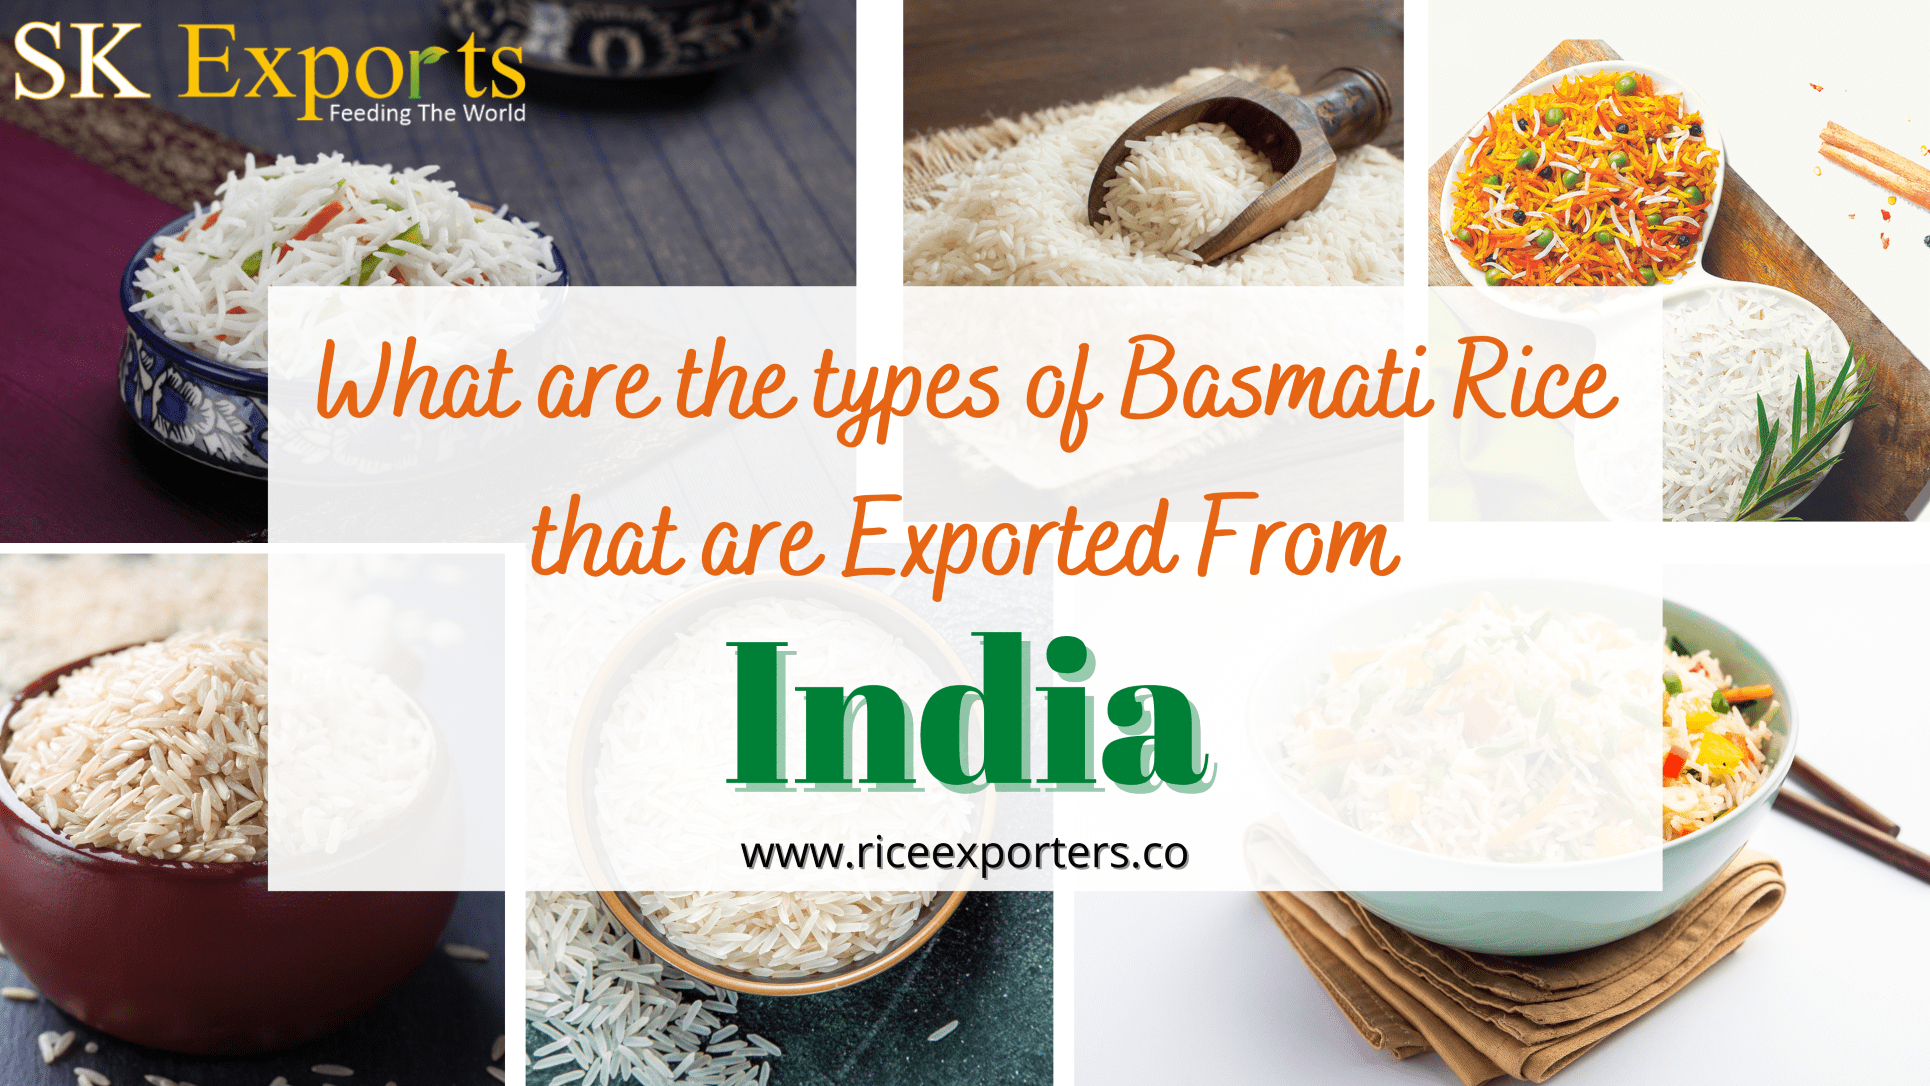 Types of basmati rice